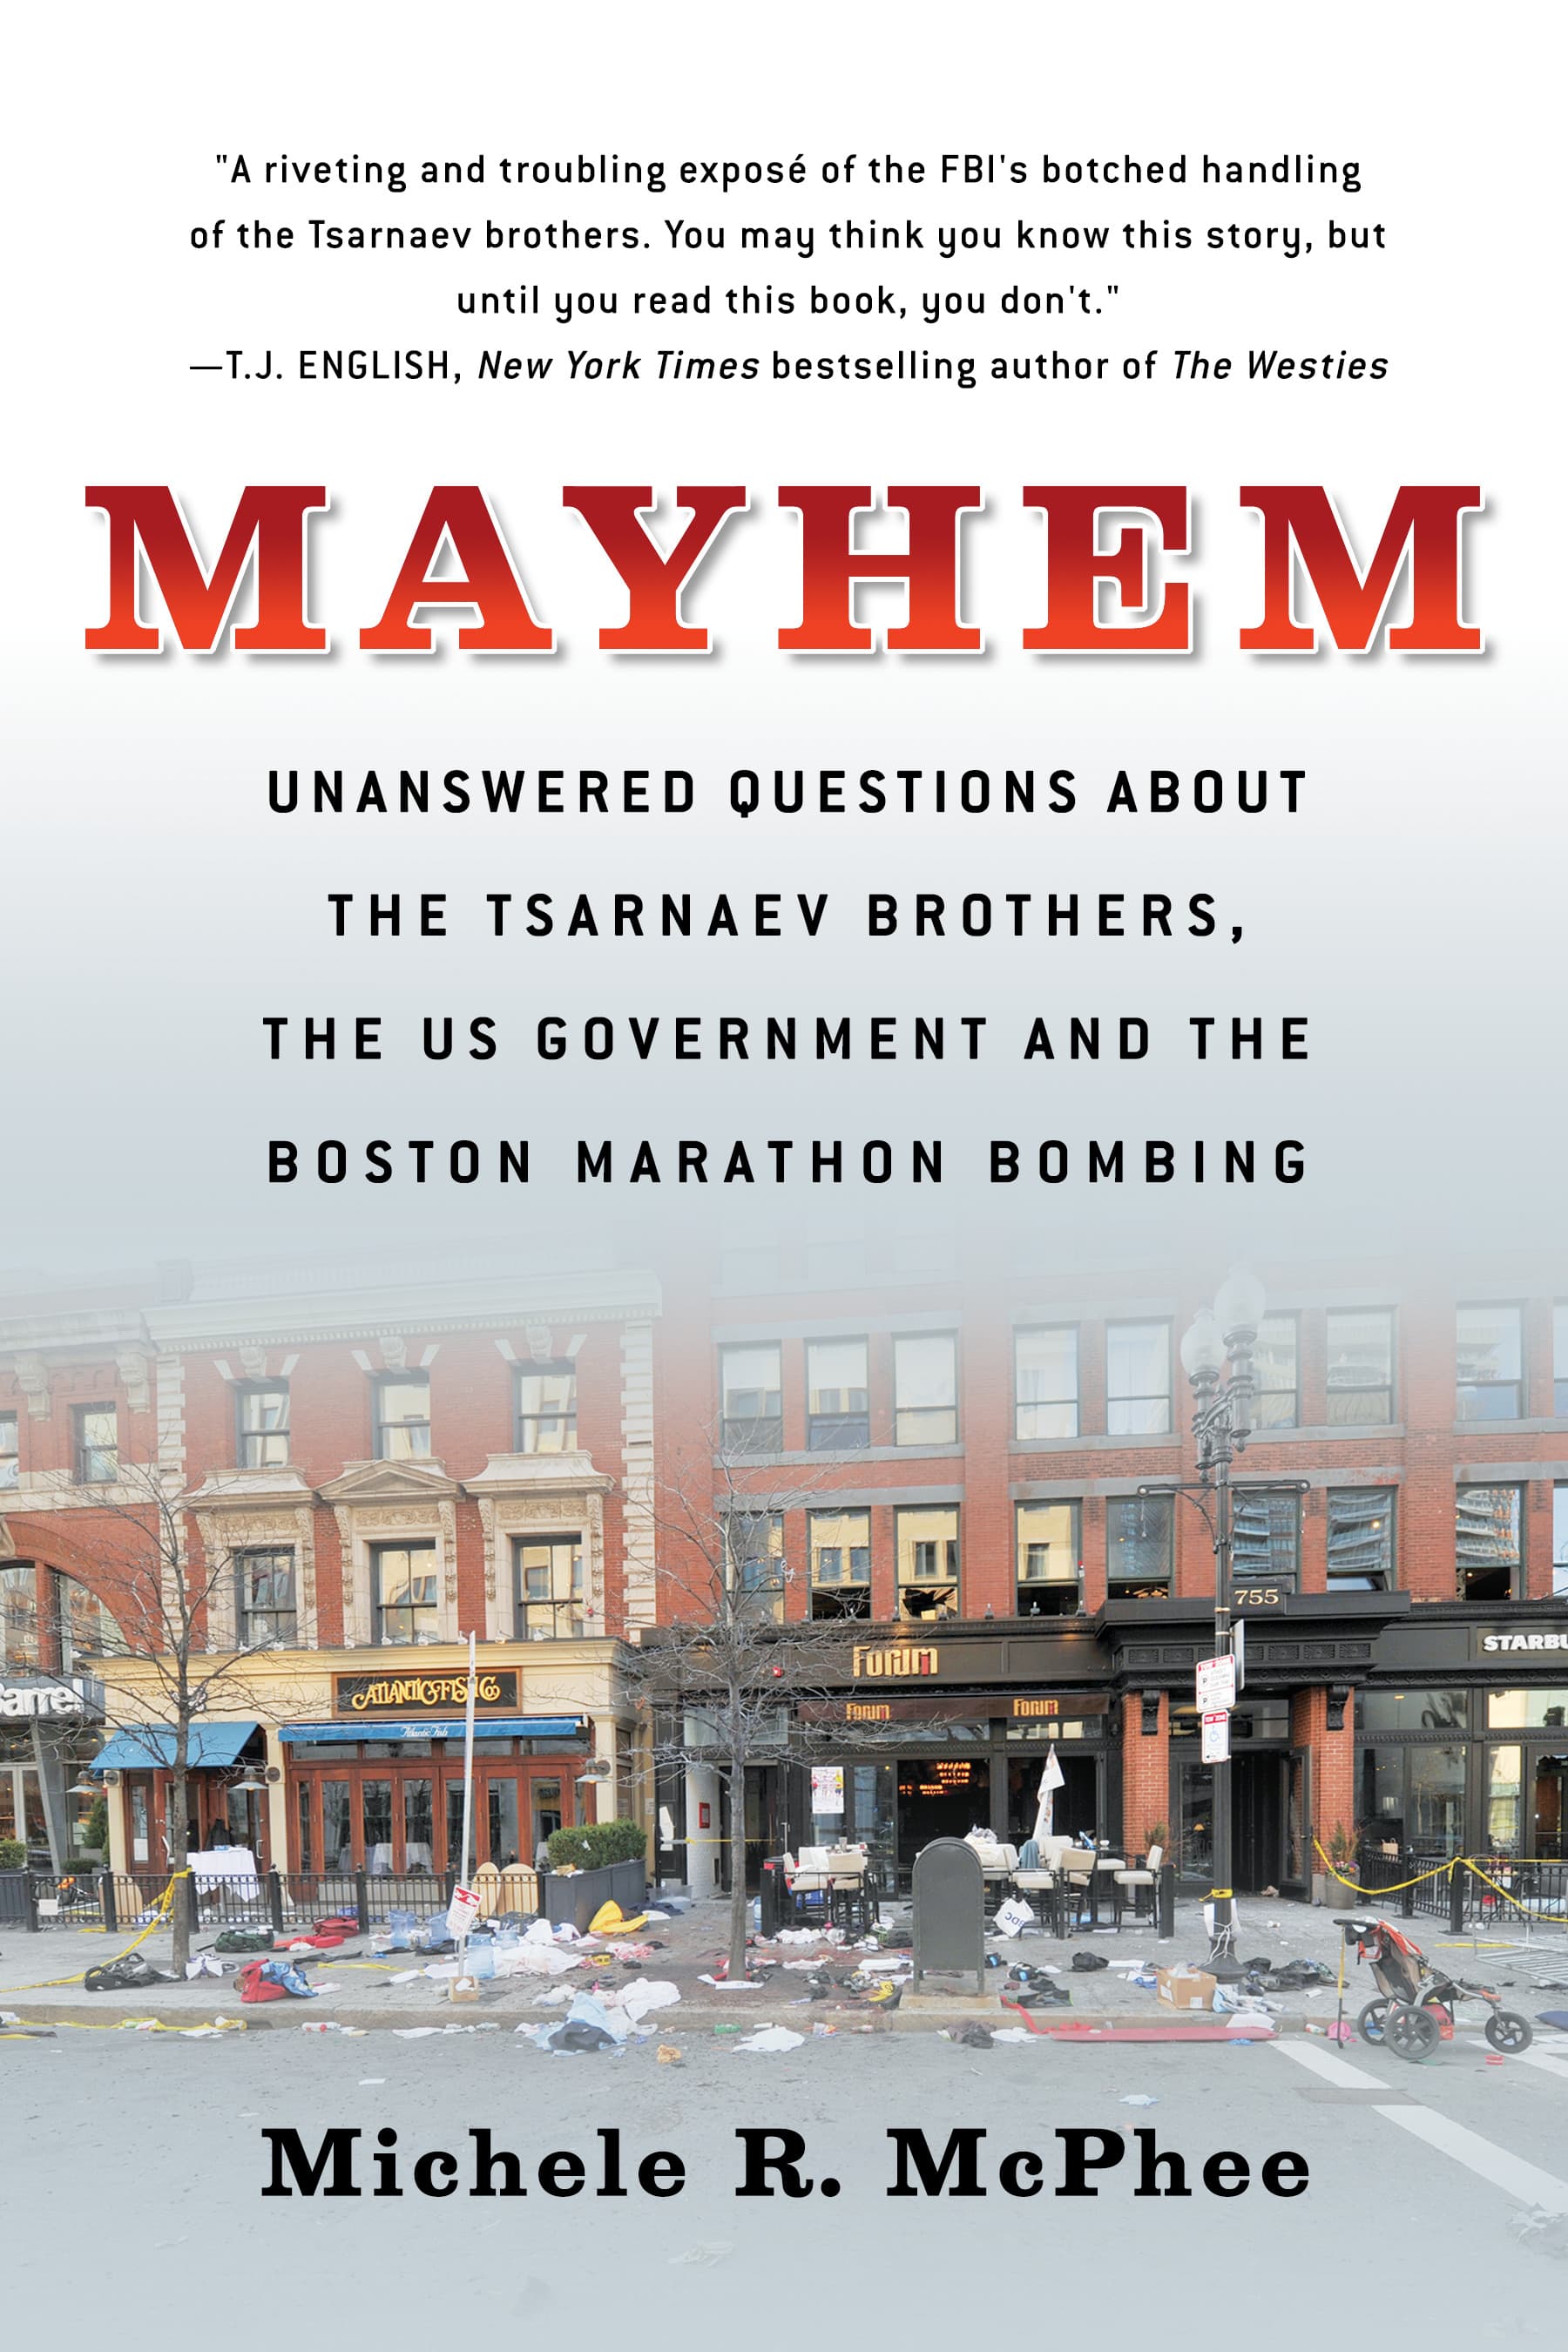 In Latest Book Michele Mcphee Investigates Mayhem Surrounding The Boston Marathon Bombing The Artery